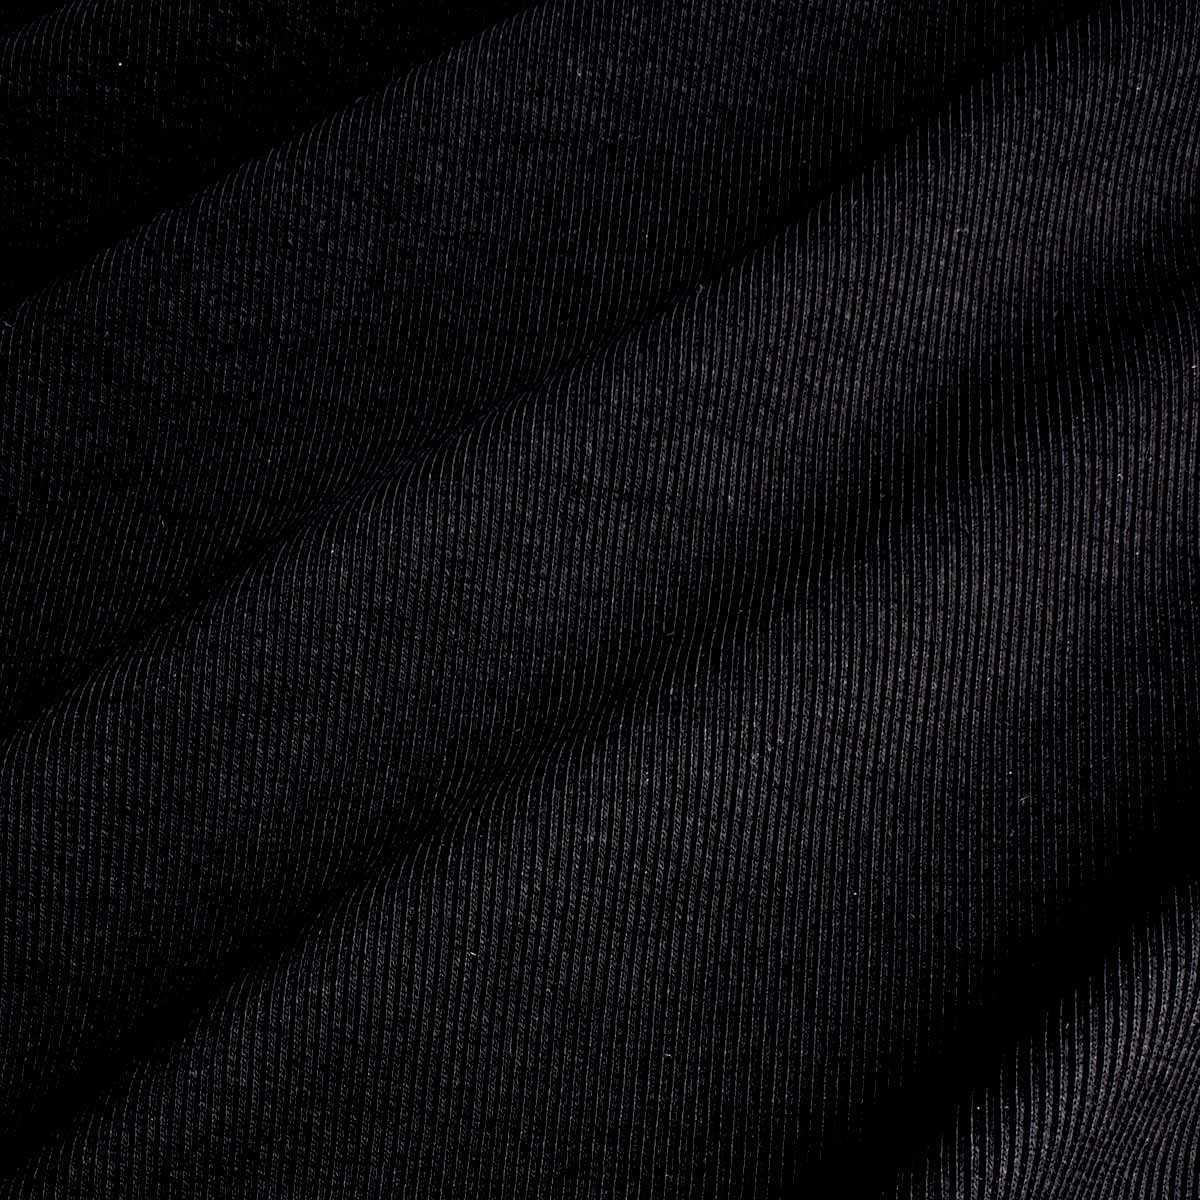 Organic Cotton + Tencel Stretch Knit Jersey - Black